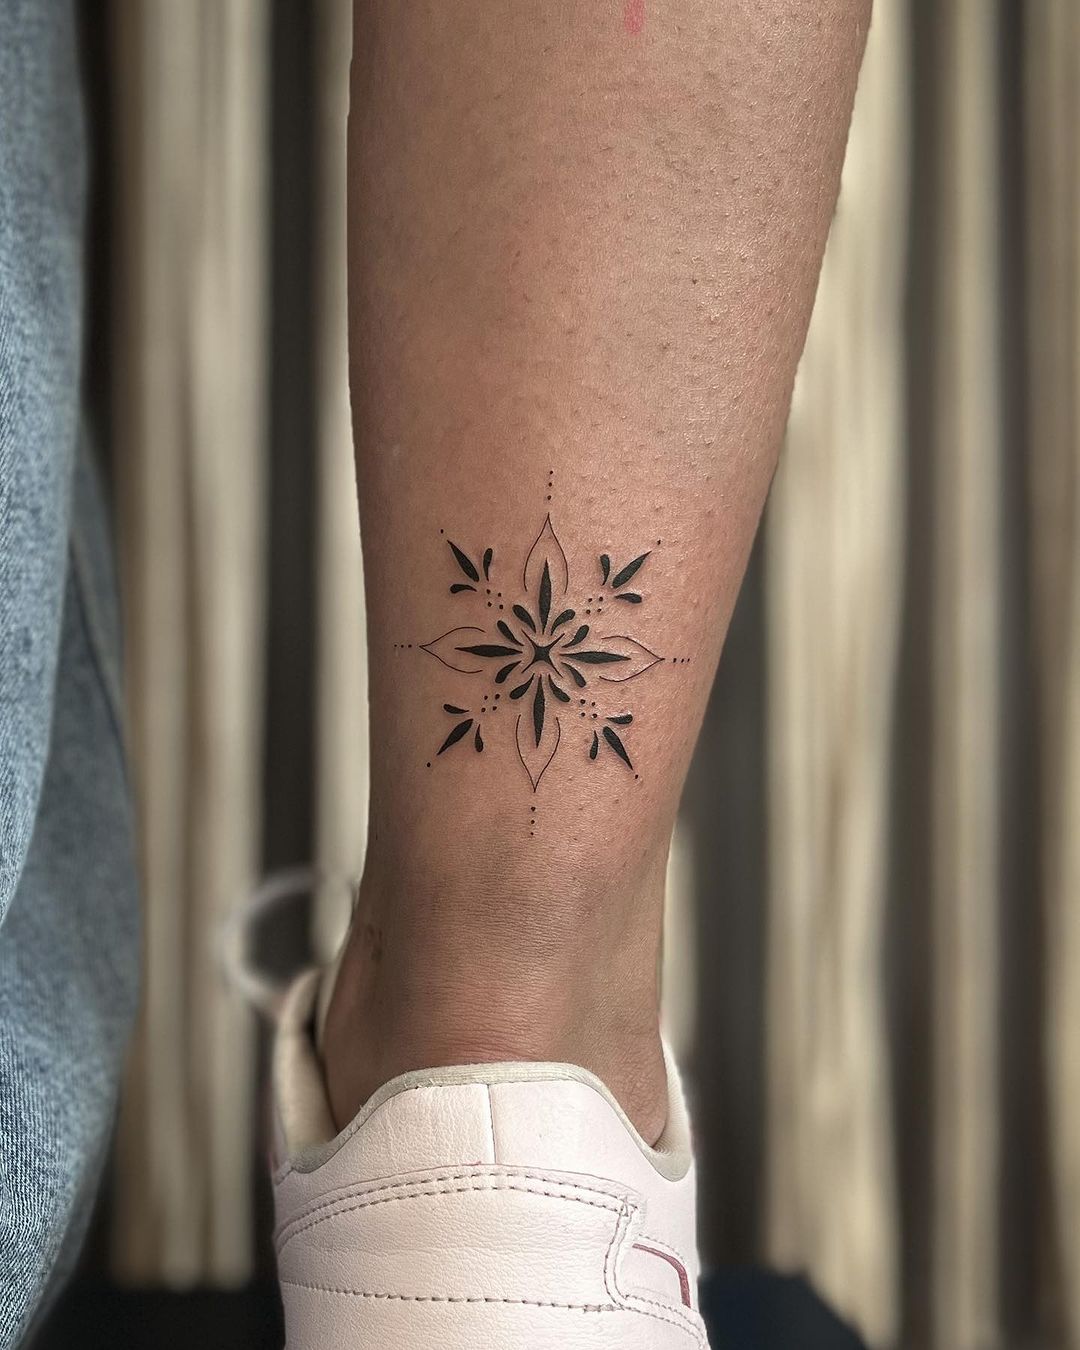 Blackwork sleeve tattoos by paula.mandala